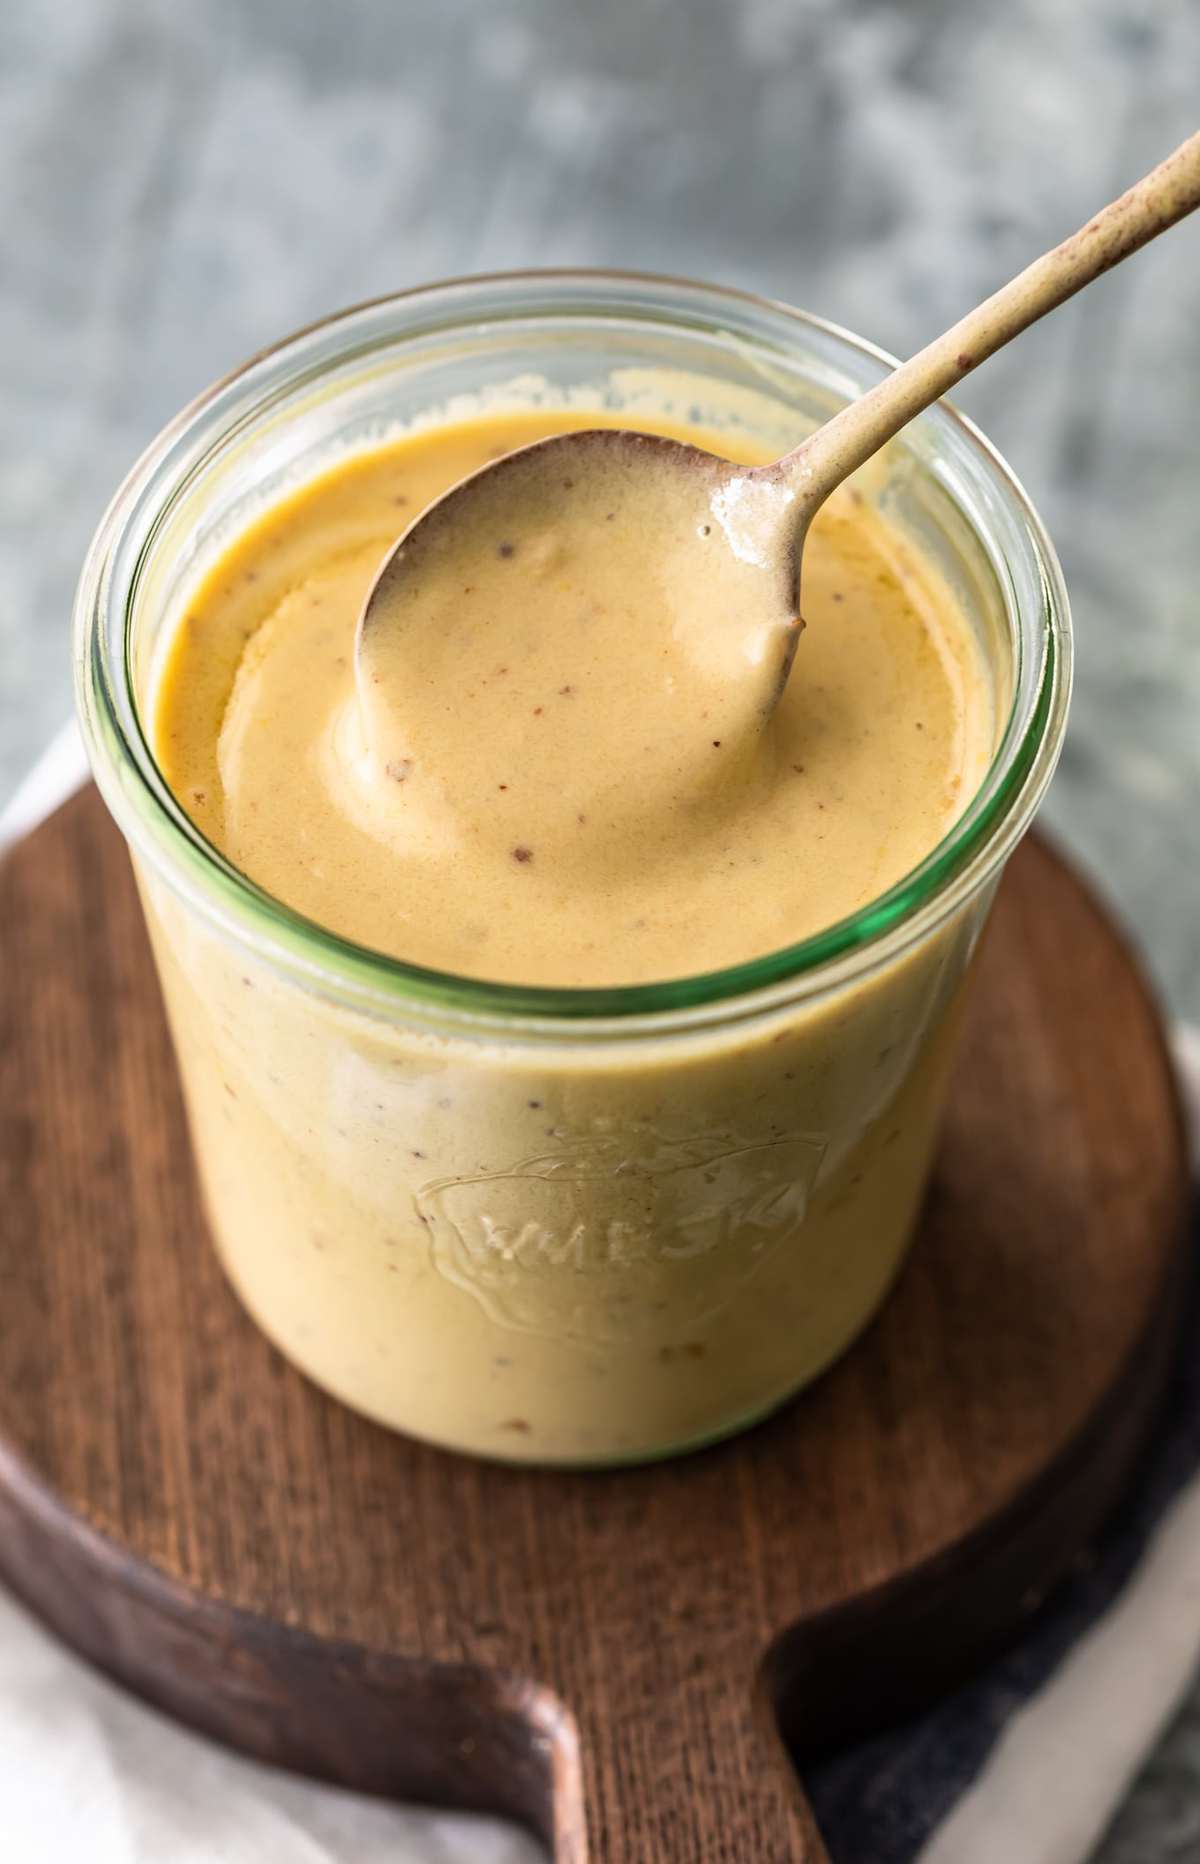 Mustard Cream Sauce in a glass jar